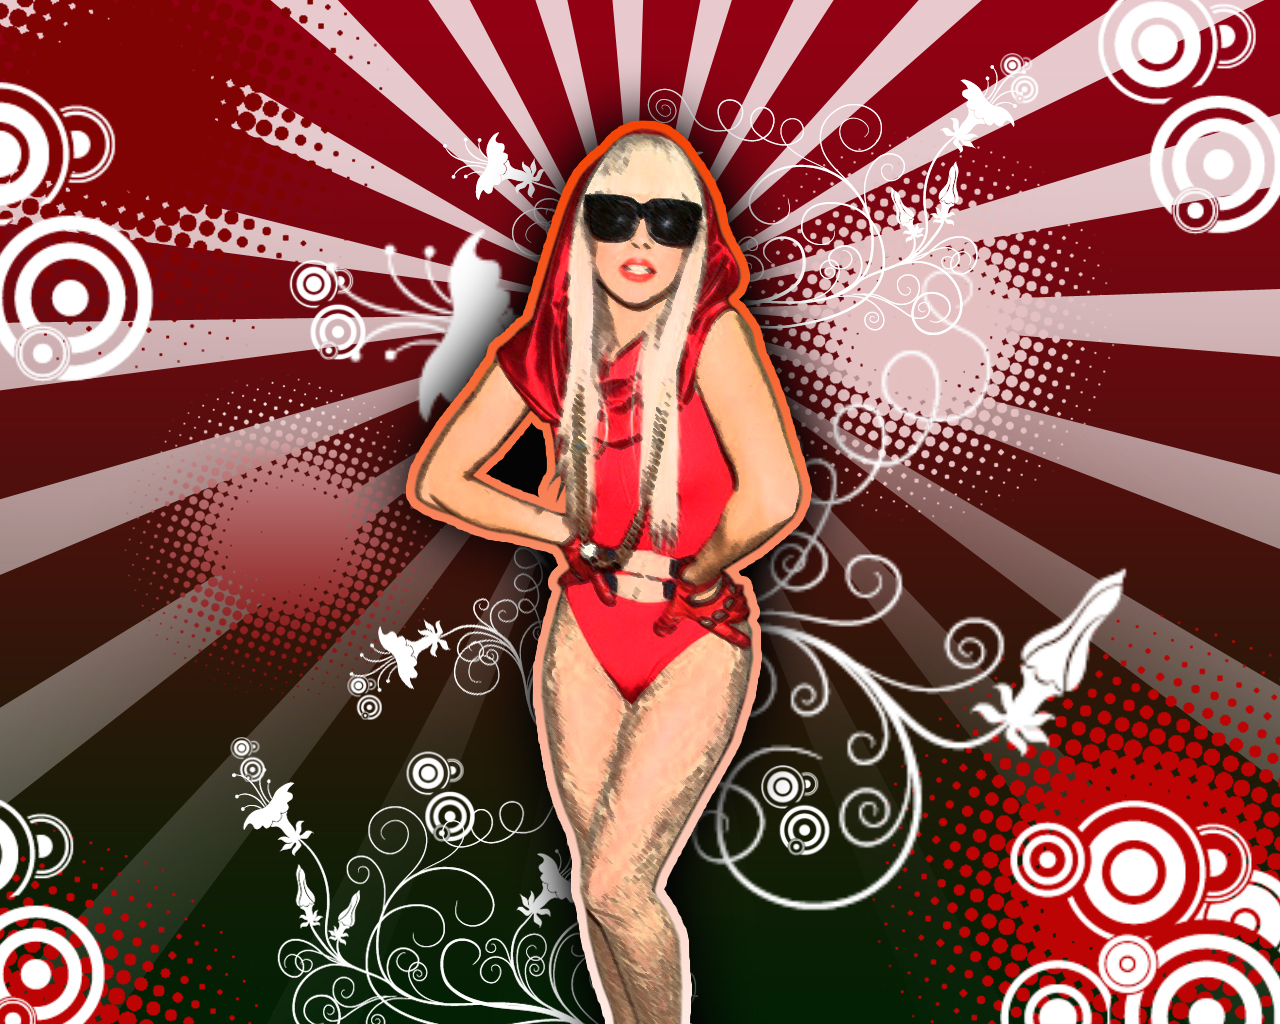 http://1.bp.blogspot.com/-L4dMfkMuvdk/Tl4nAy4KbKI/AAAAAAAADVs/yKlYNT_O07w/s1600/Lady-Gaga-Wallpaper-2011-5.jpg